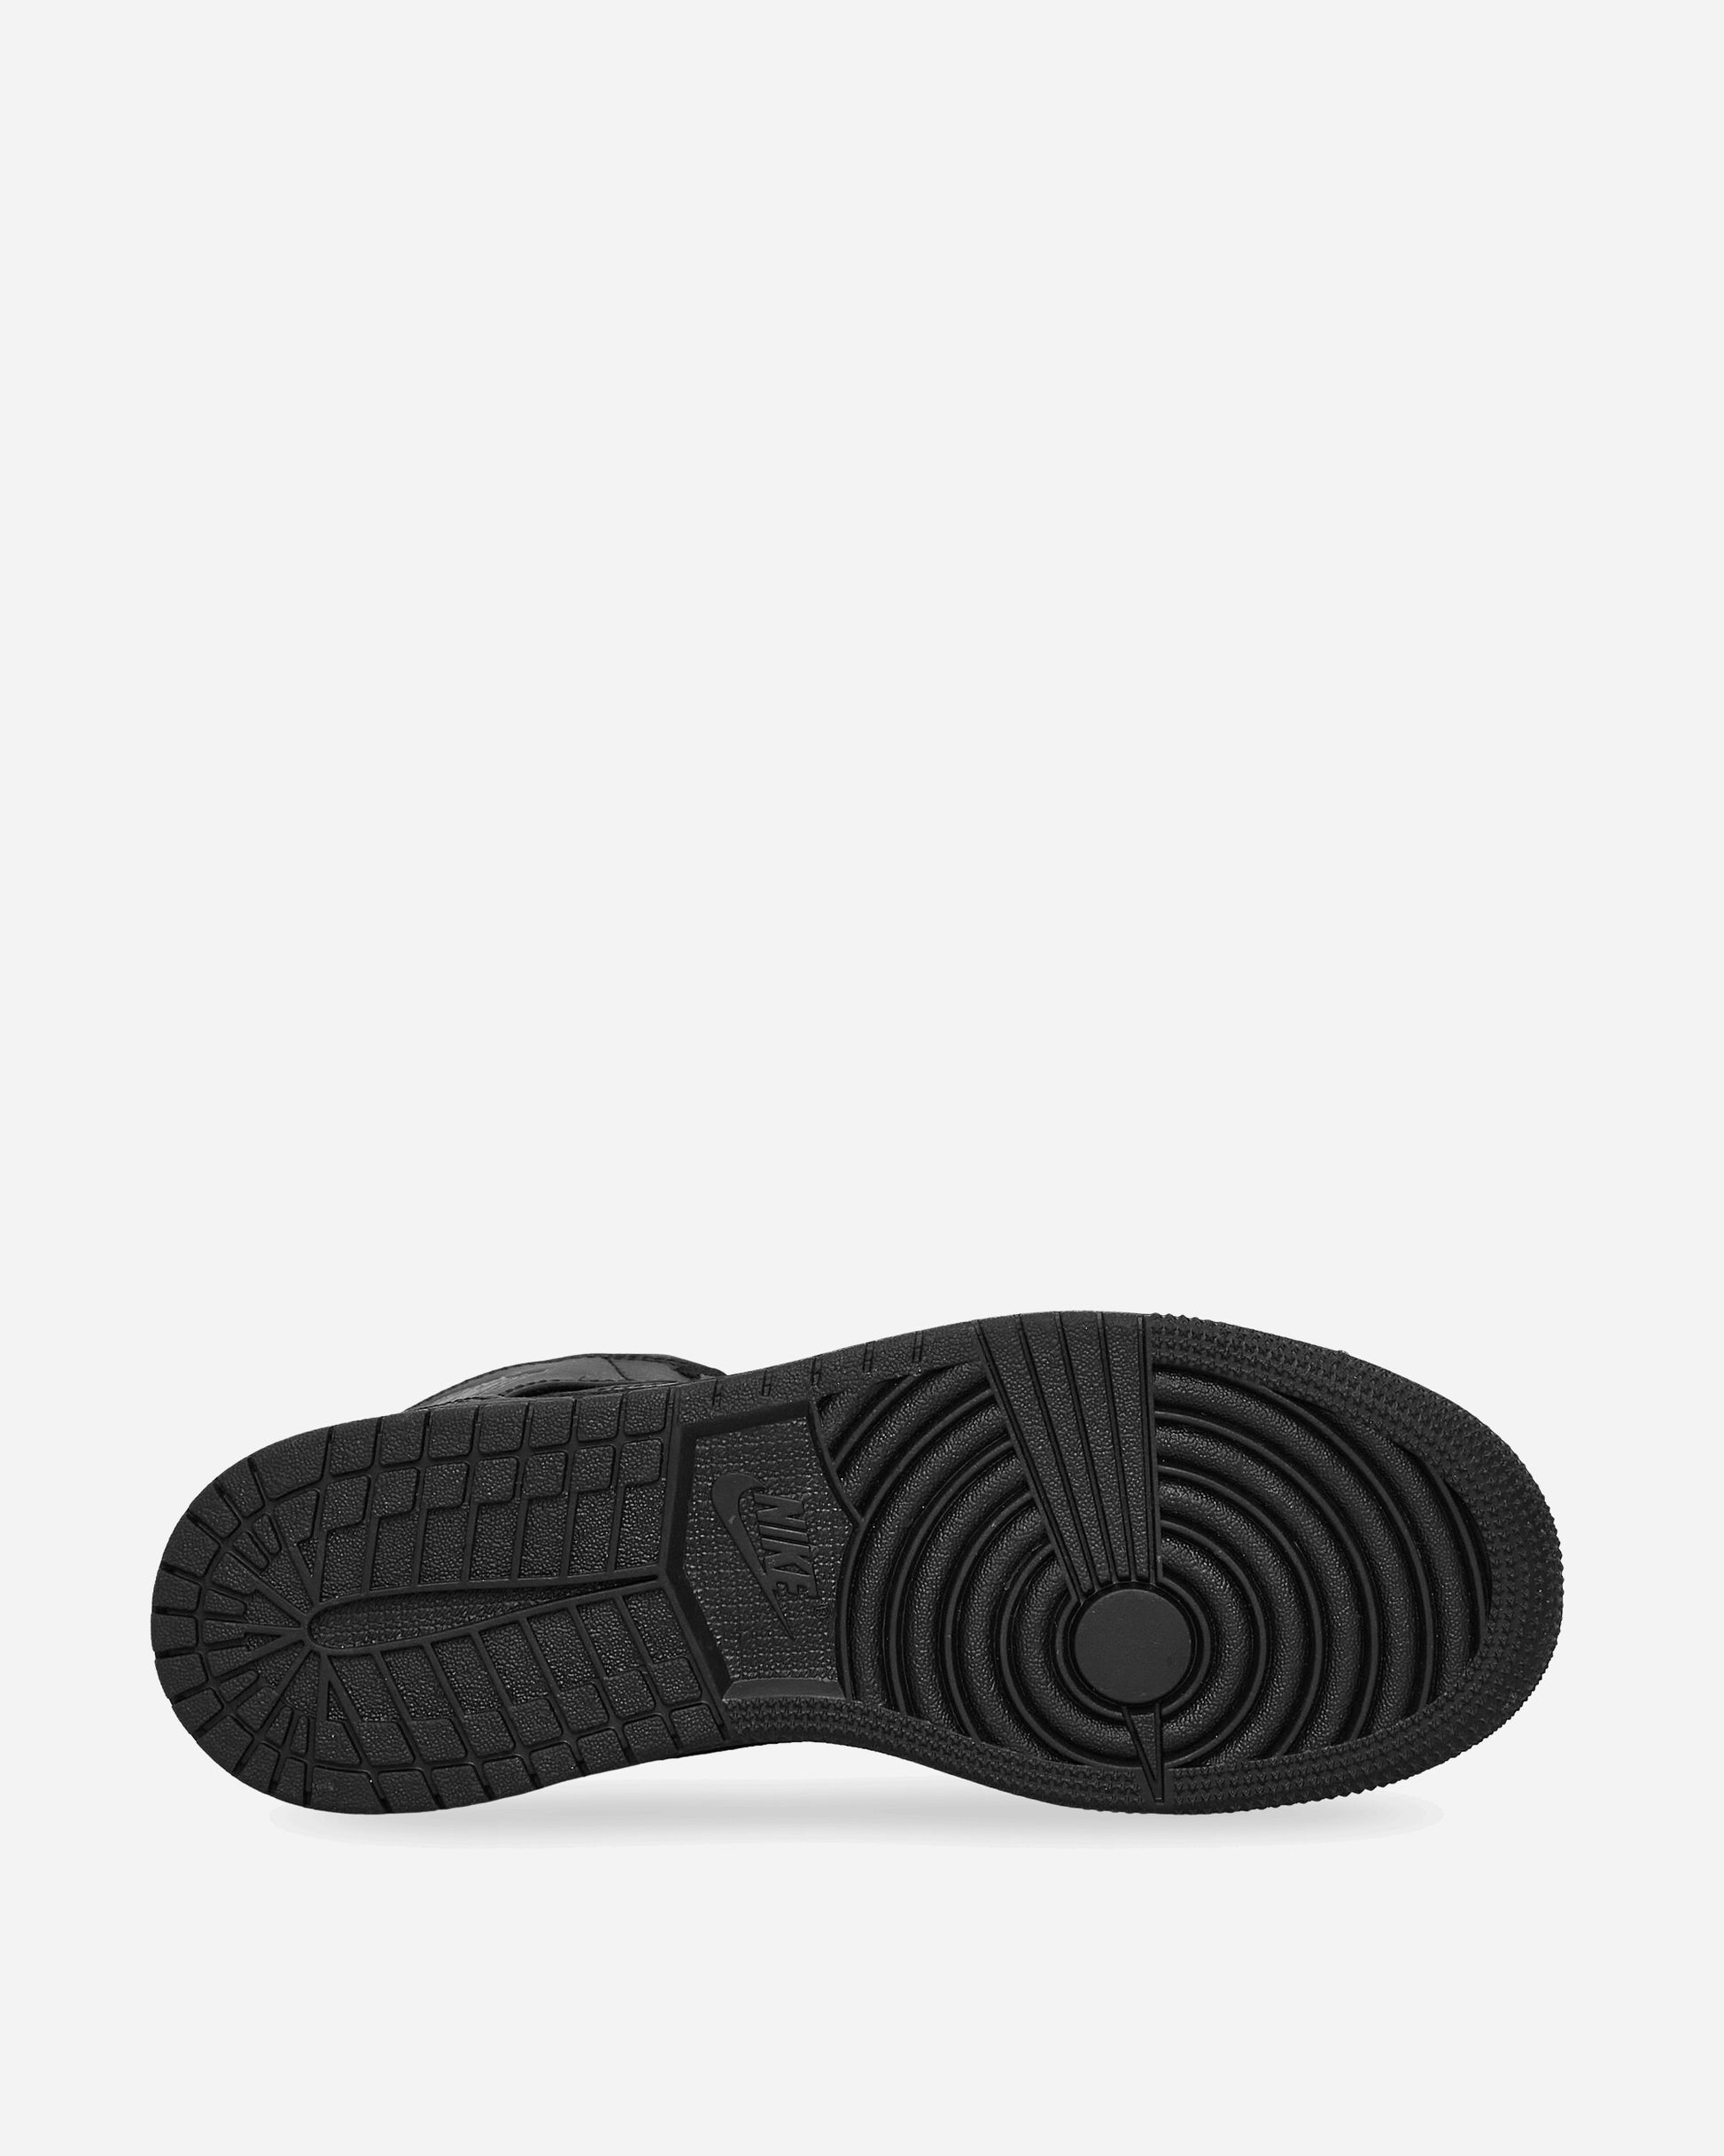 Nike Jordan Air Jordan 1 Mid (Gs) Black/Black Sneakers Mid 554725-093